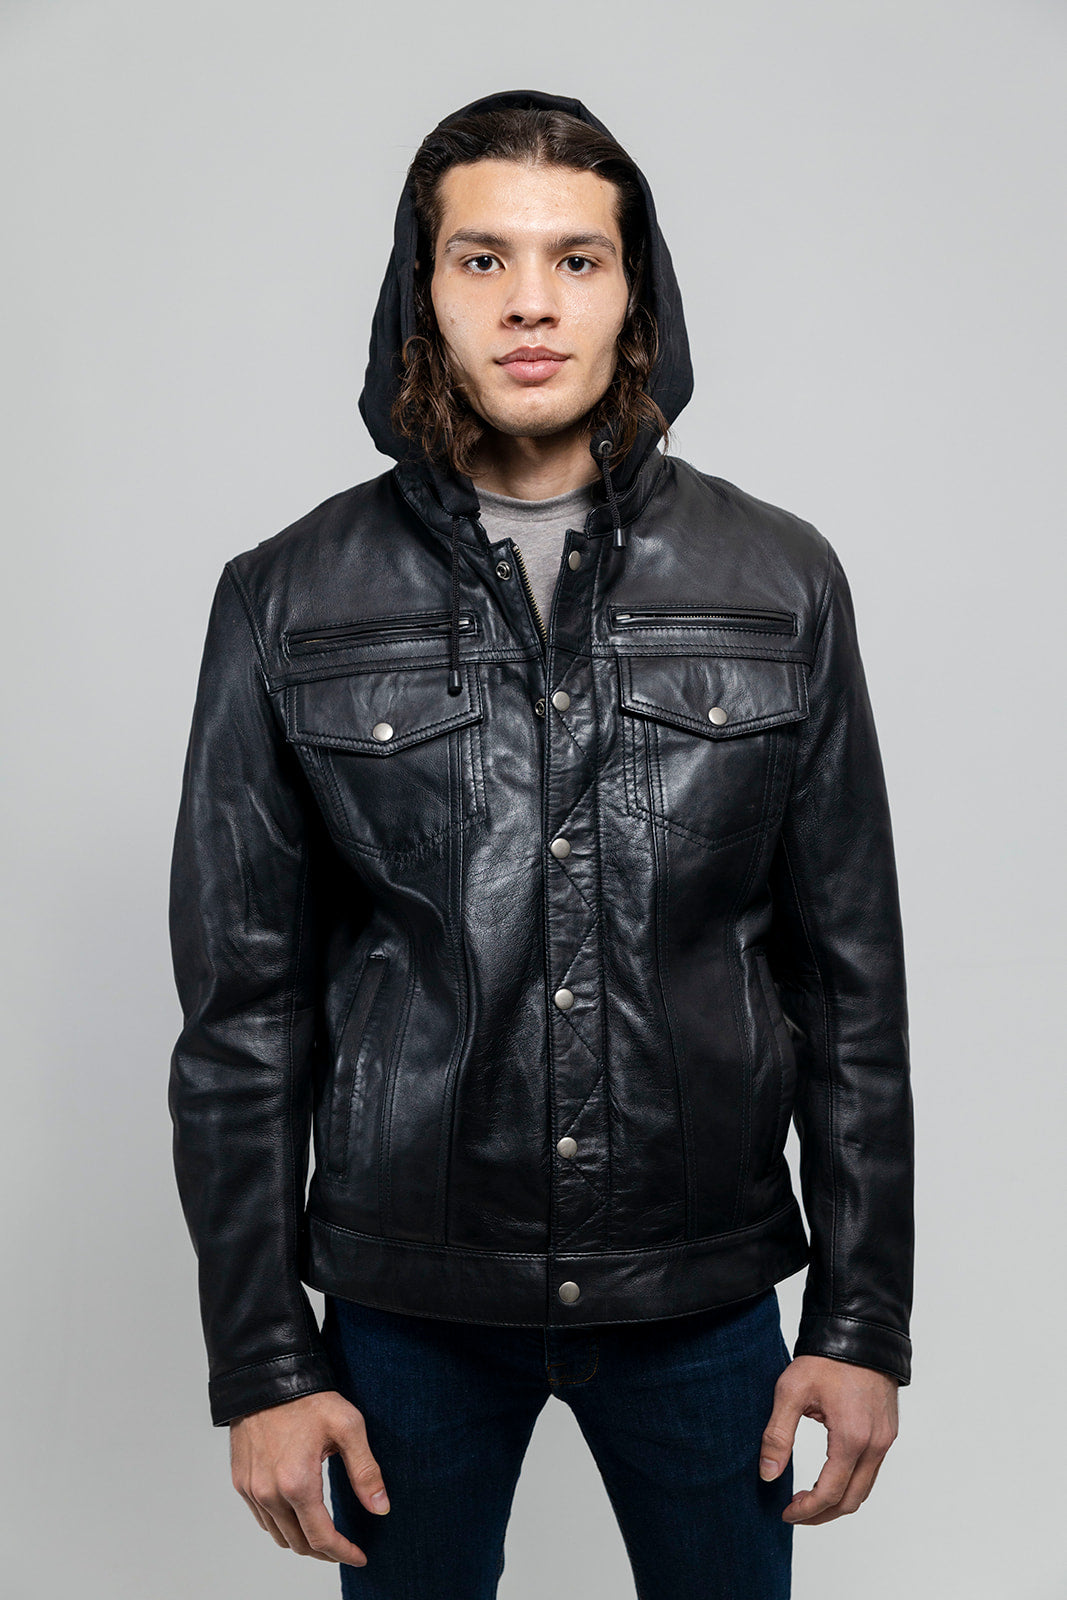 Axel Men's Fashion Leather Jacket (POS) Men's Leather Jacket Whet Blu NYC   